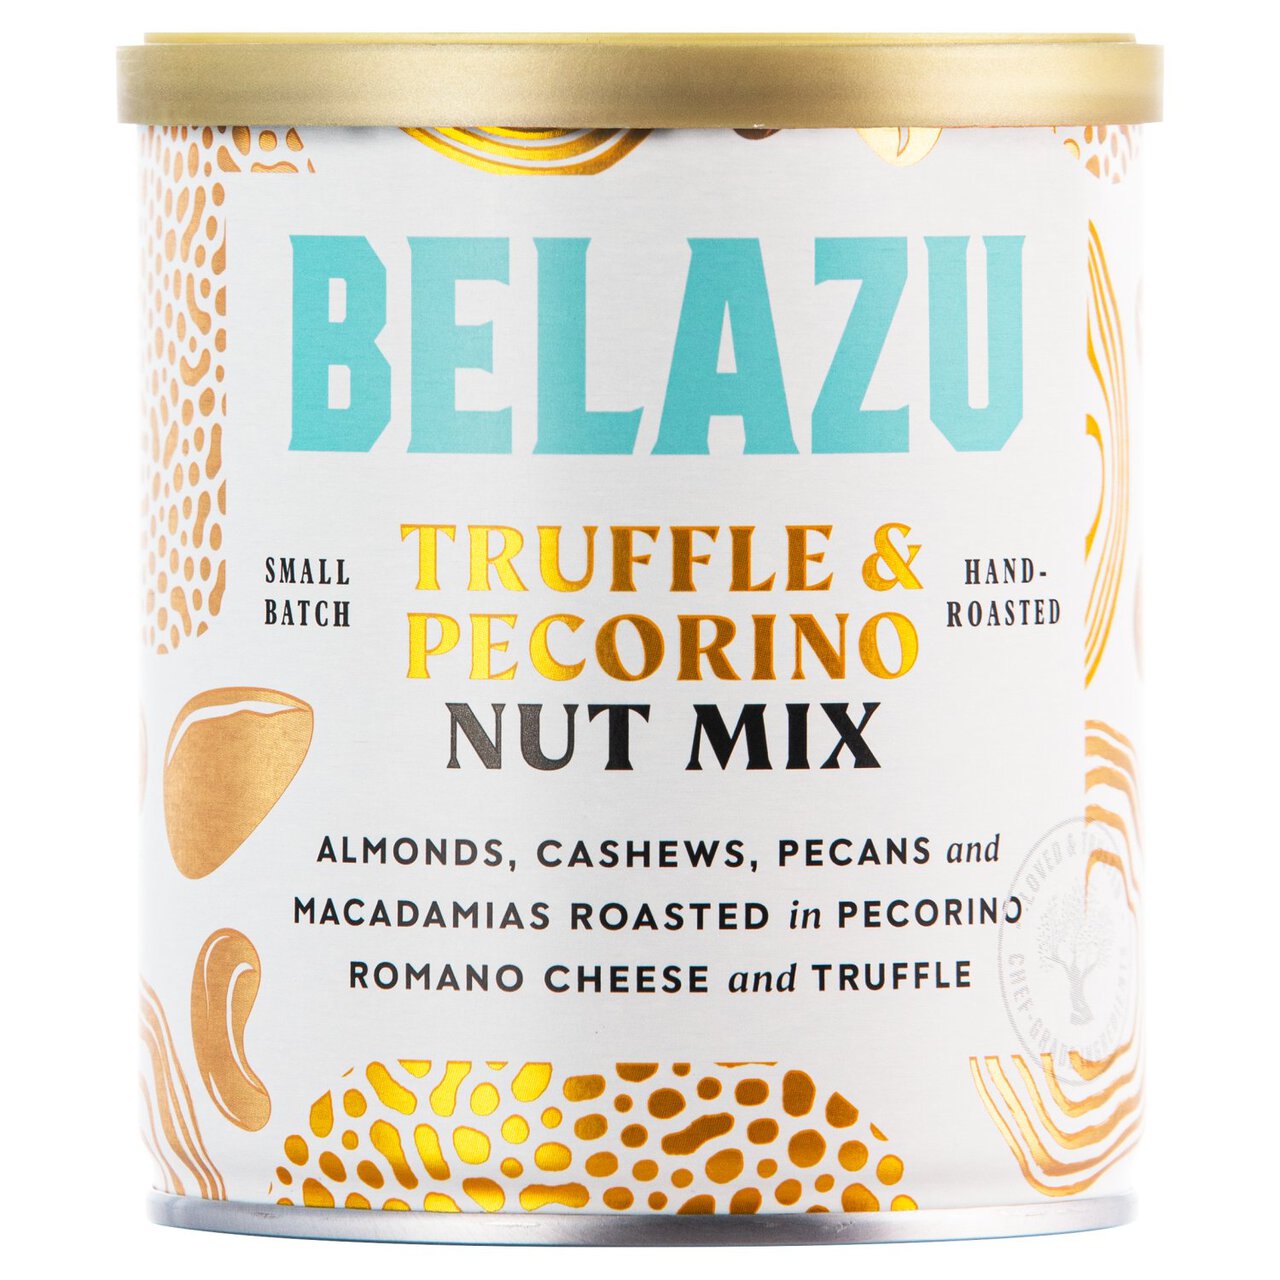 Belazu Truffle & Pecorino Nut Mix 135g